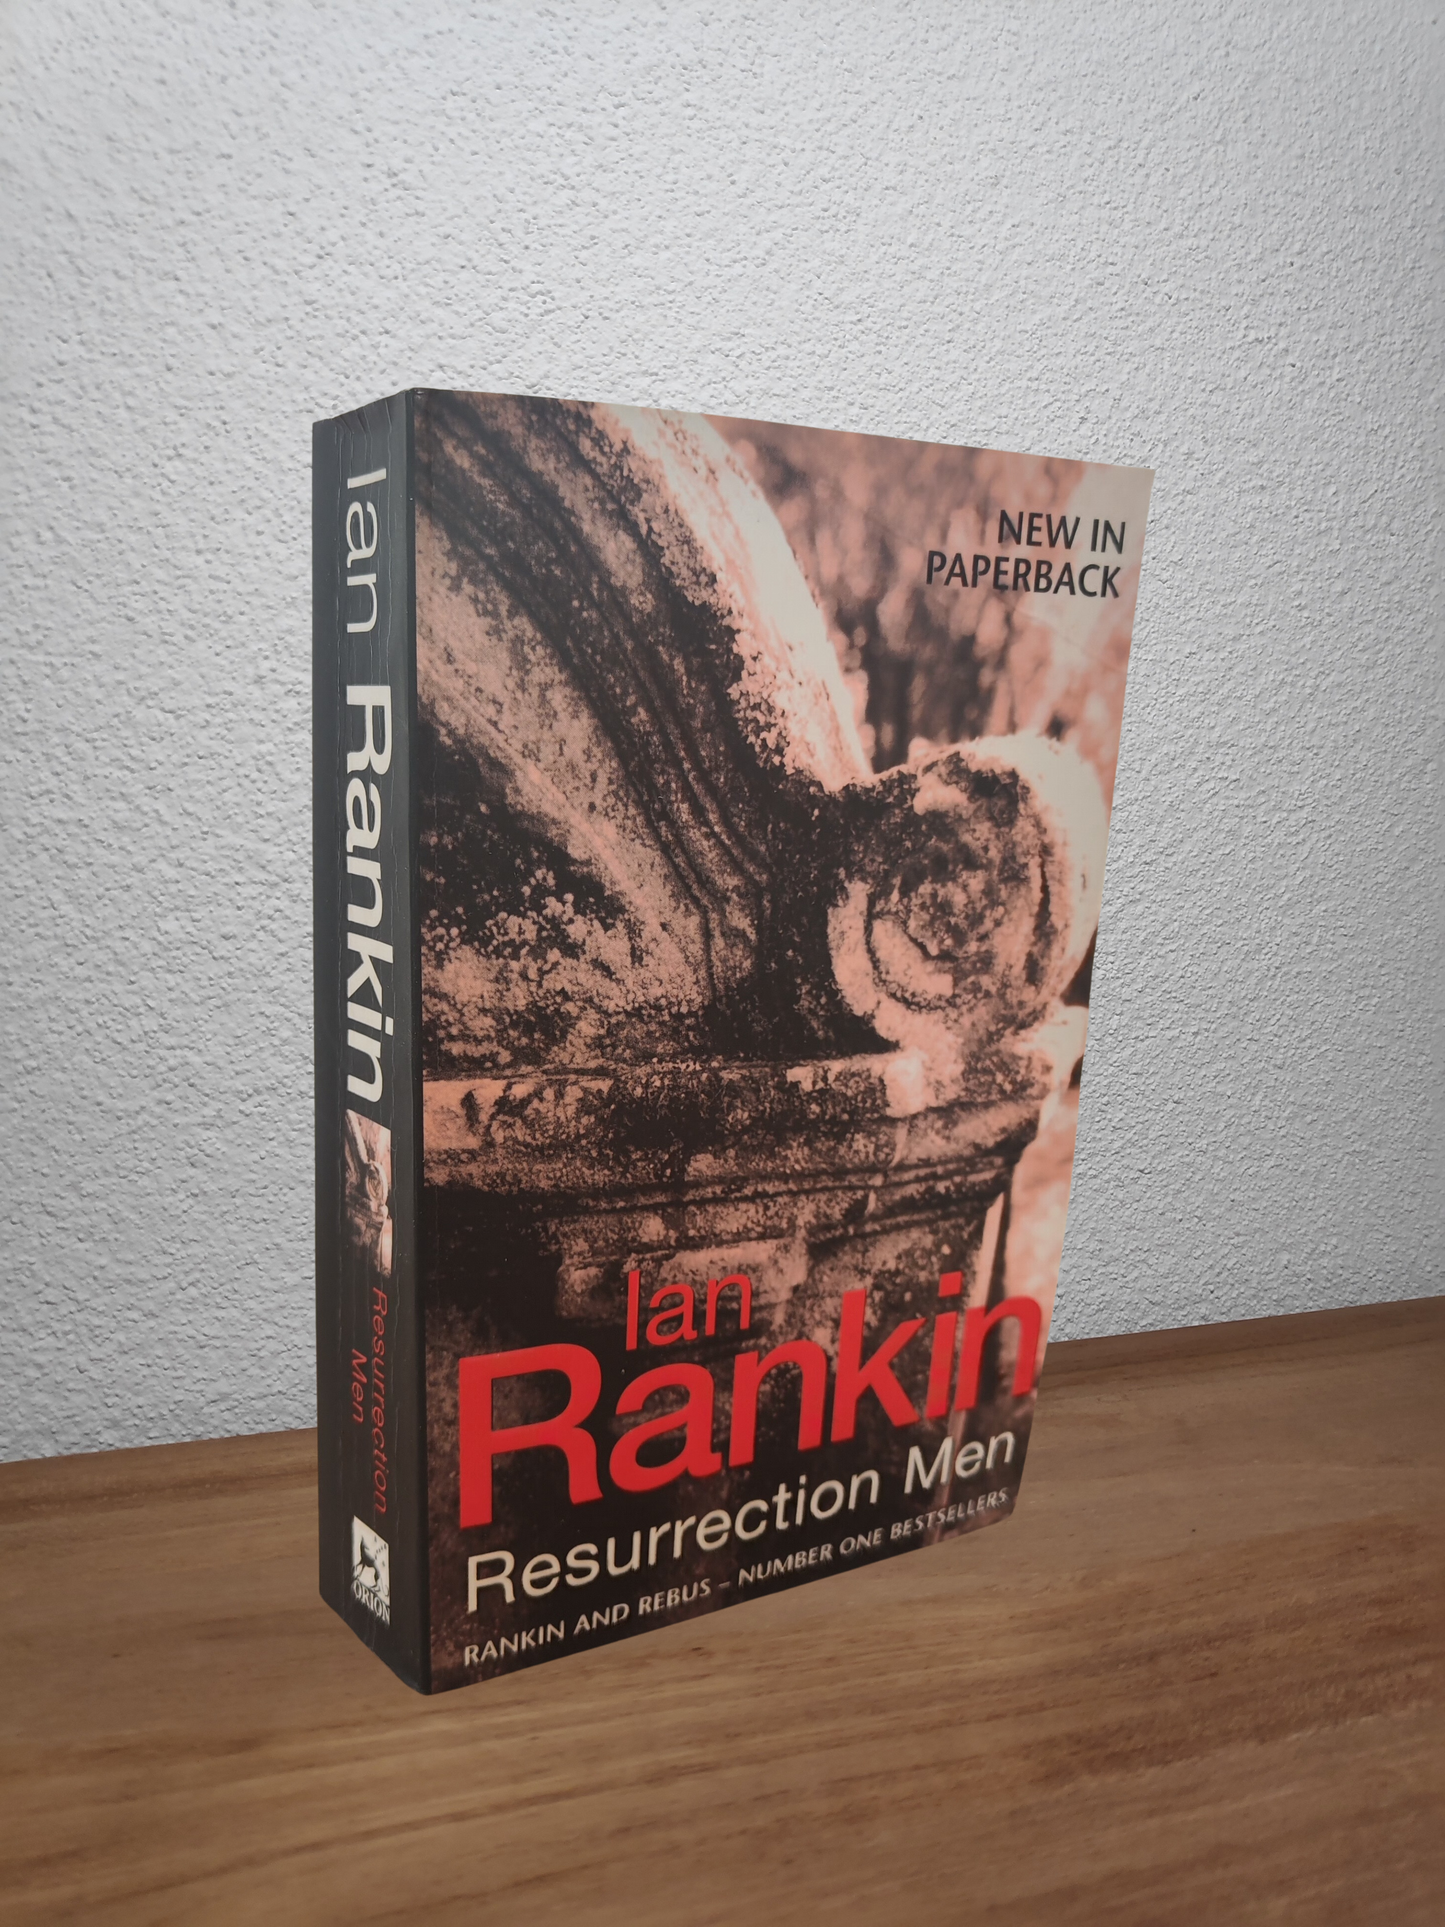 Ian Rankin - Resurrection Men (Inspector Rebus #13)